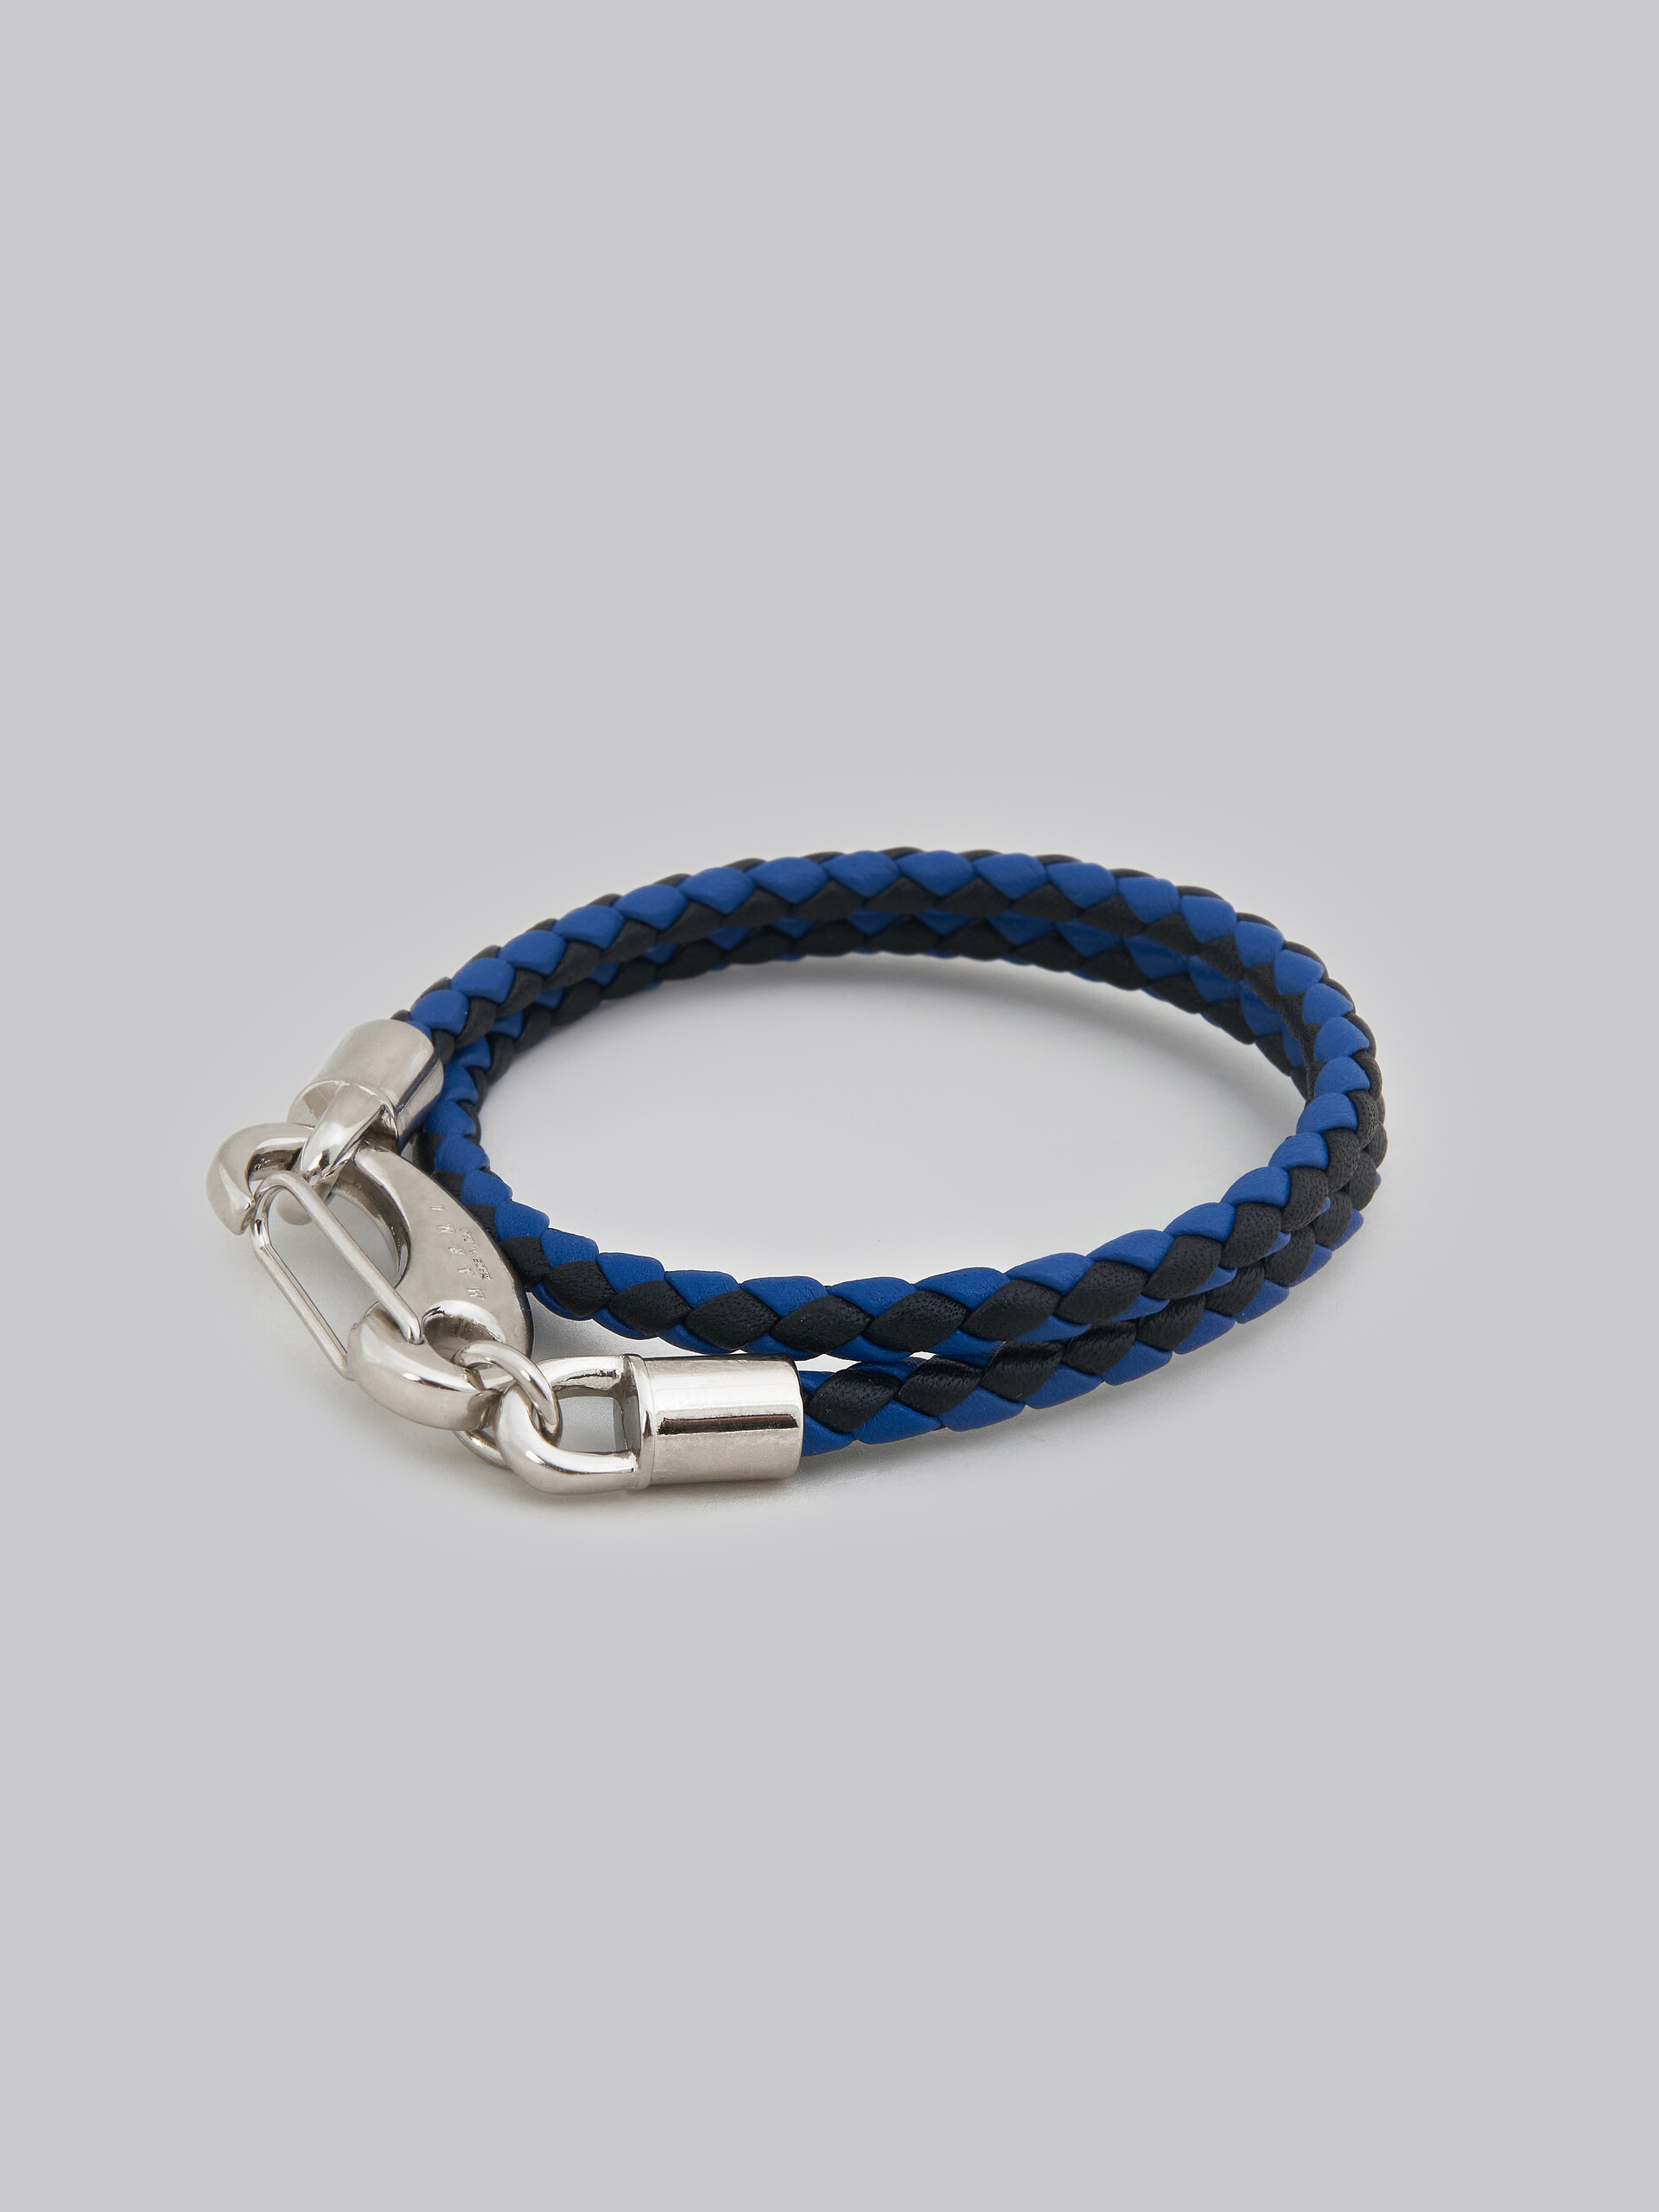 Blue and black woven leather bracelet - Bracelets - Image 3